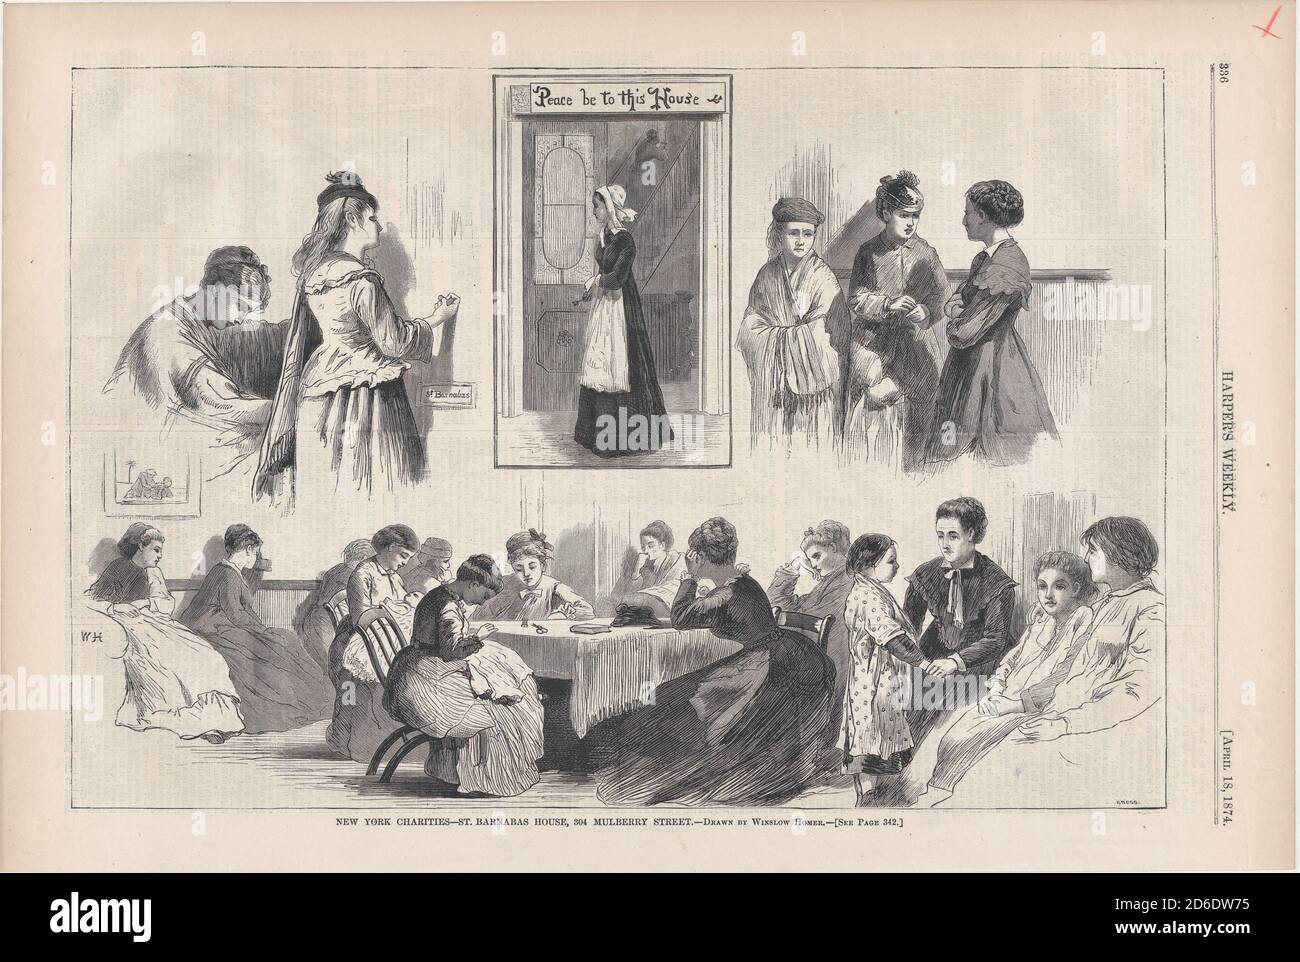 New York Charities - St. Barnabas House, 304 Mulberry Street (Harper's Weekly, Vol. XVIII), April 18, 1874. Stock Photo